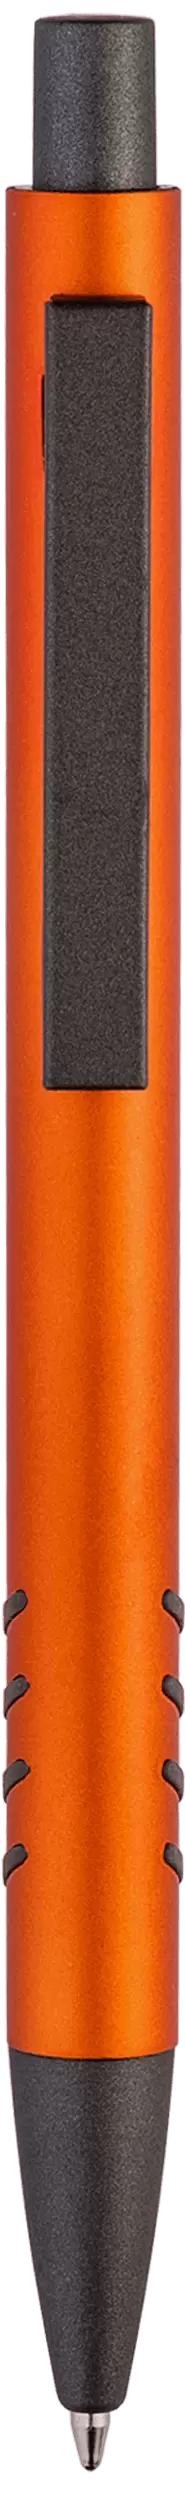 Ручка MOKKO TITAN Оранжевая 1135-05